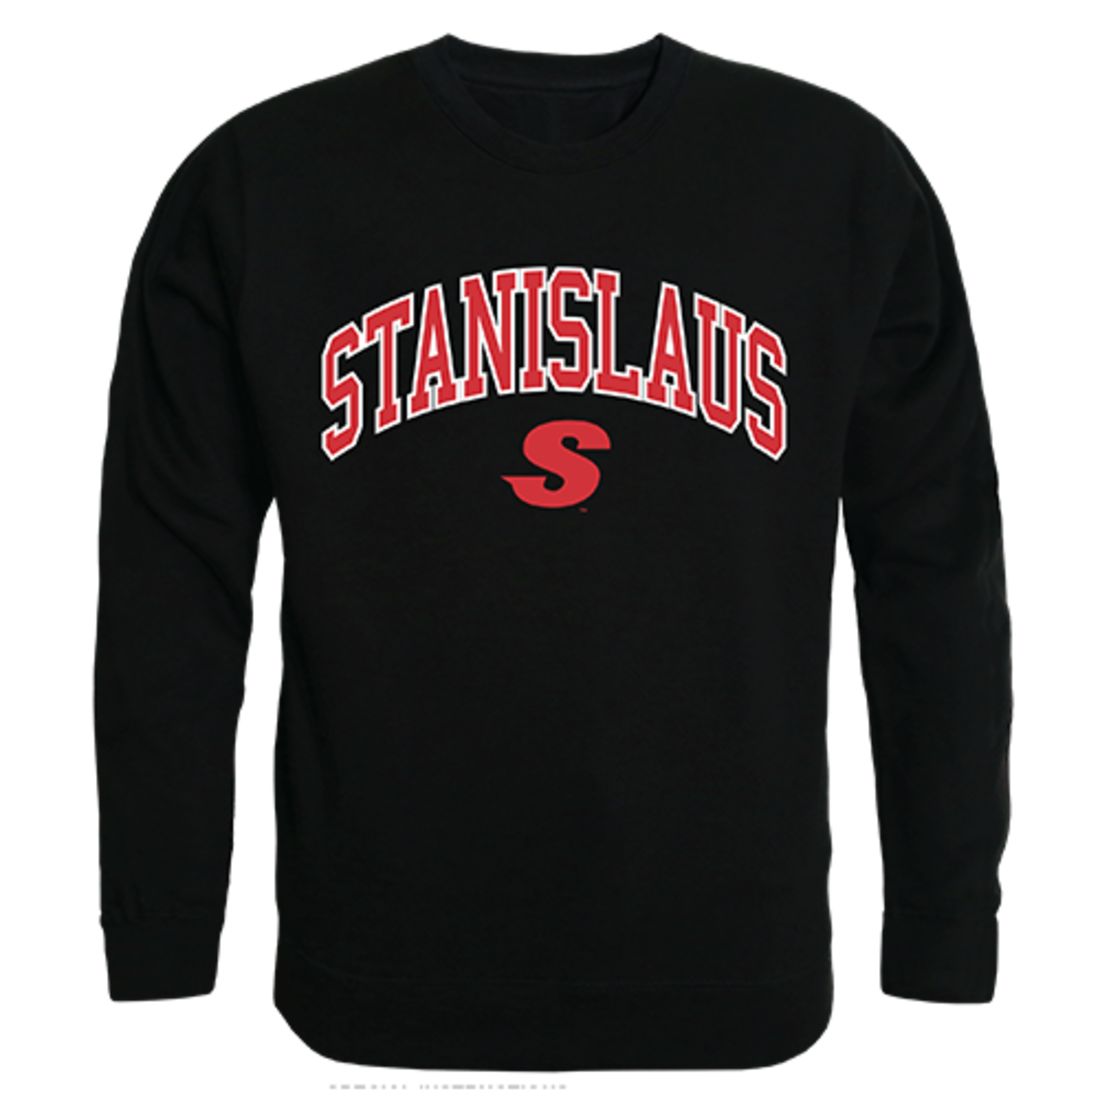 CSUSTAN California State University Stanislaus Campus Crewneck Pullover Sweatshirt Sweater Black-Campus-Wardrobe